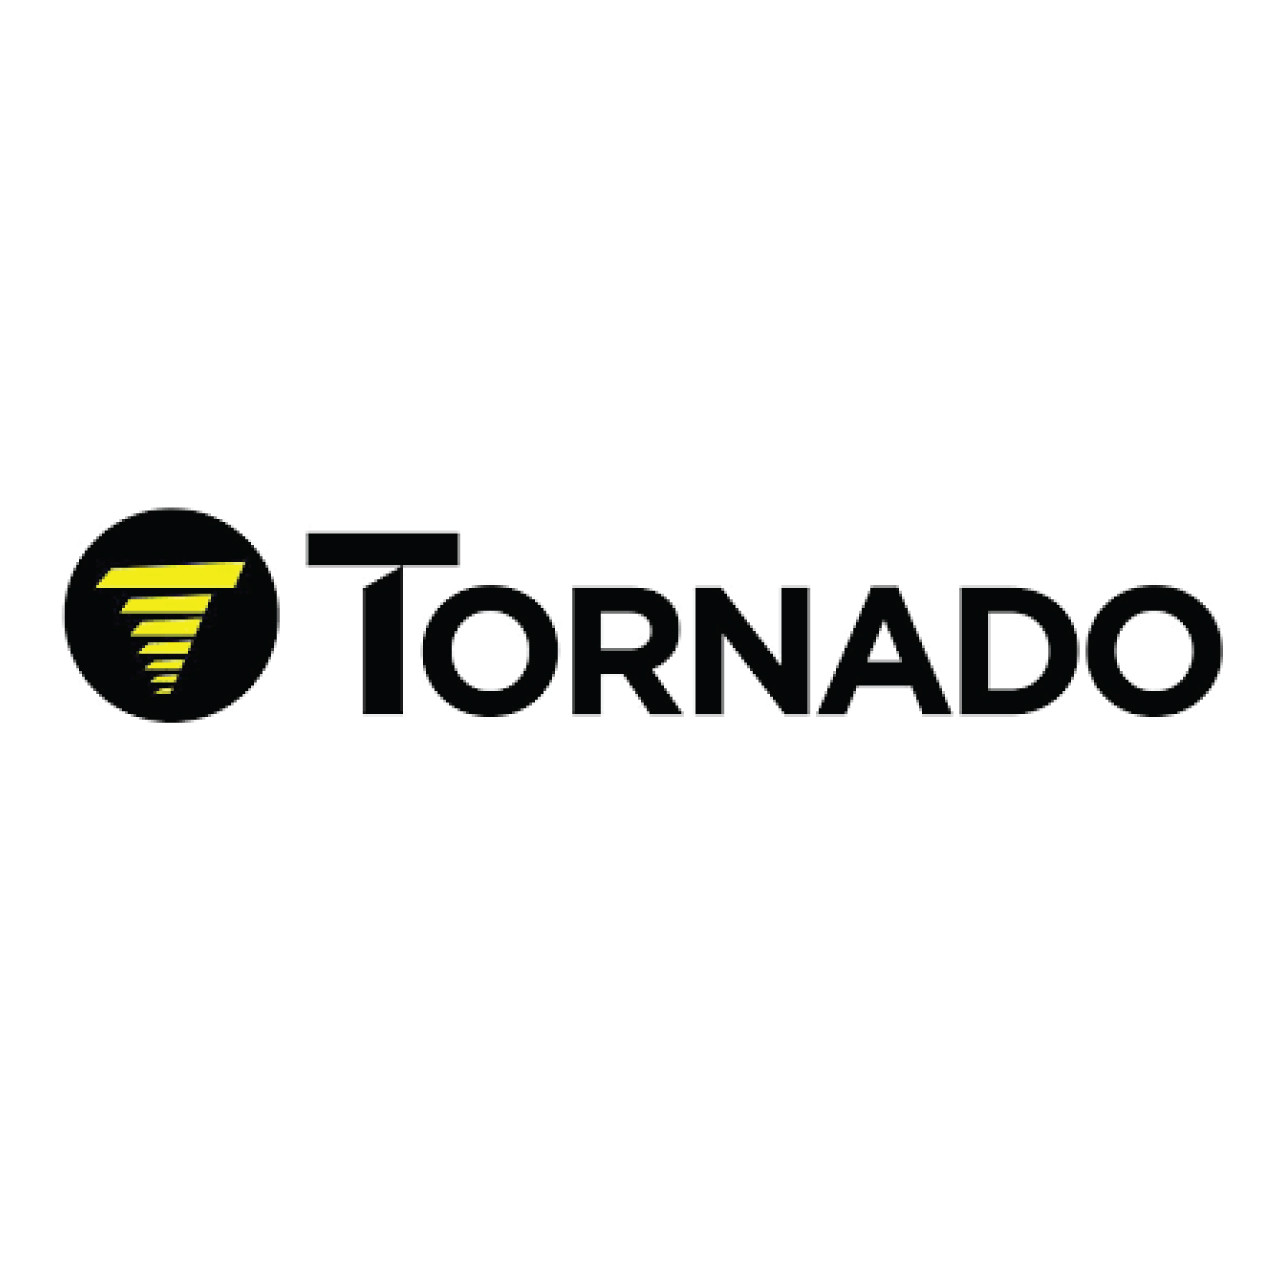 V0707001, Tornado V0707001, Tornado RIGHT WHEEL ASSEMBLY RUBBER, Tornado parts